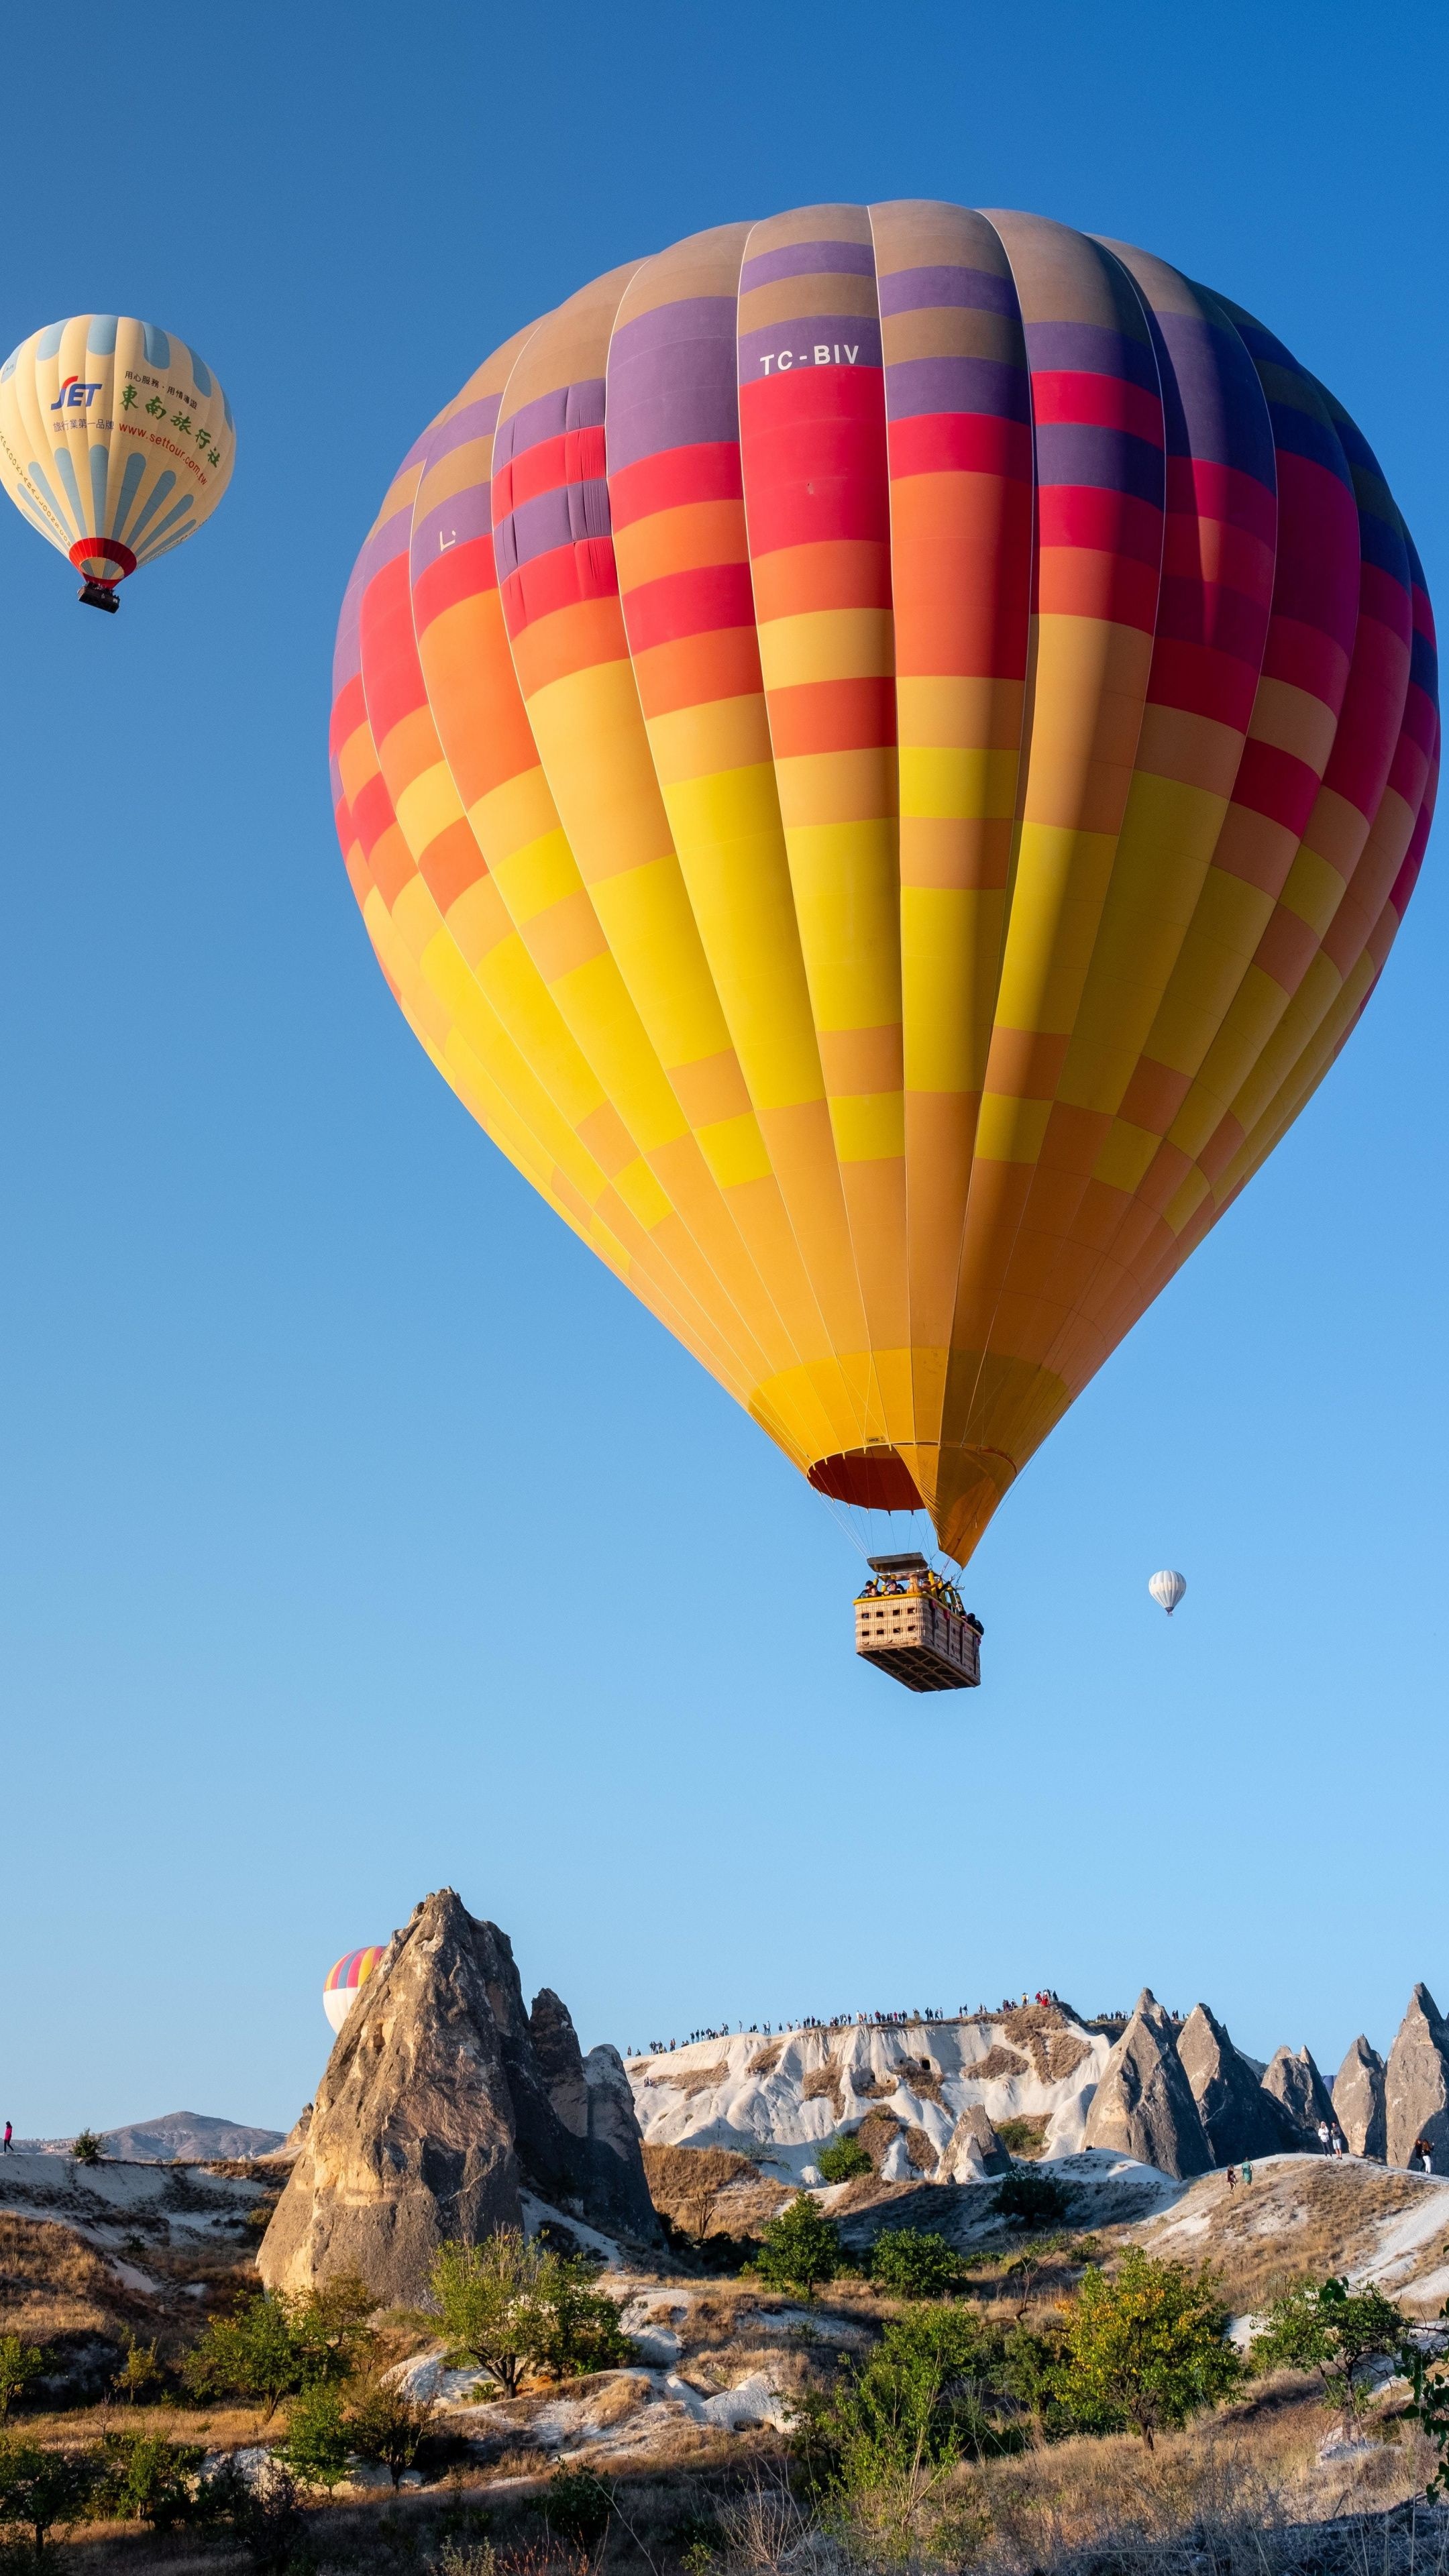 Hot Air Balloon: Wicker Basket, Air Buoyancy, Burning Liquid Propane Fuel, TC-BIV. 2160x3840 4K Background.